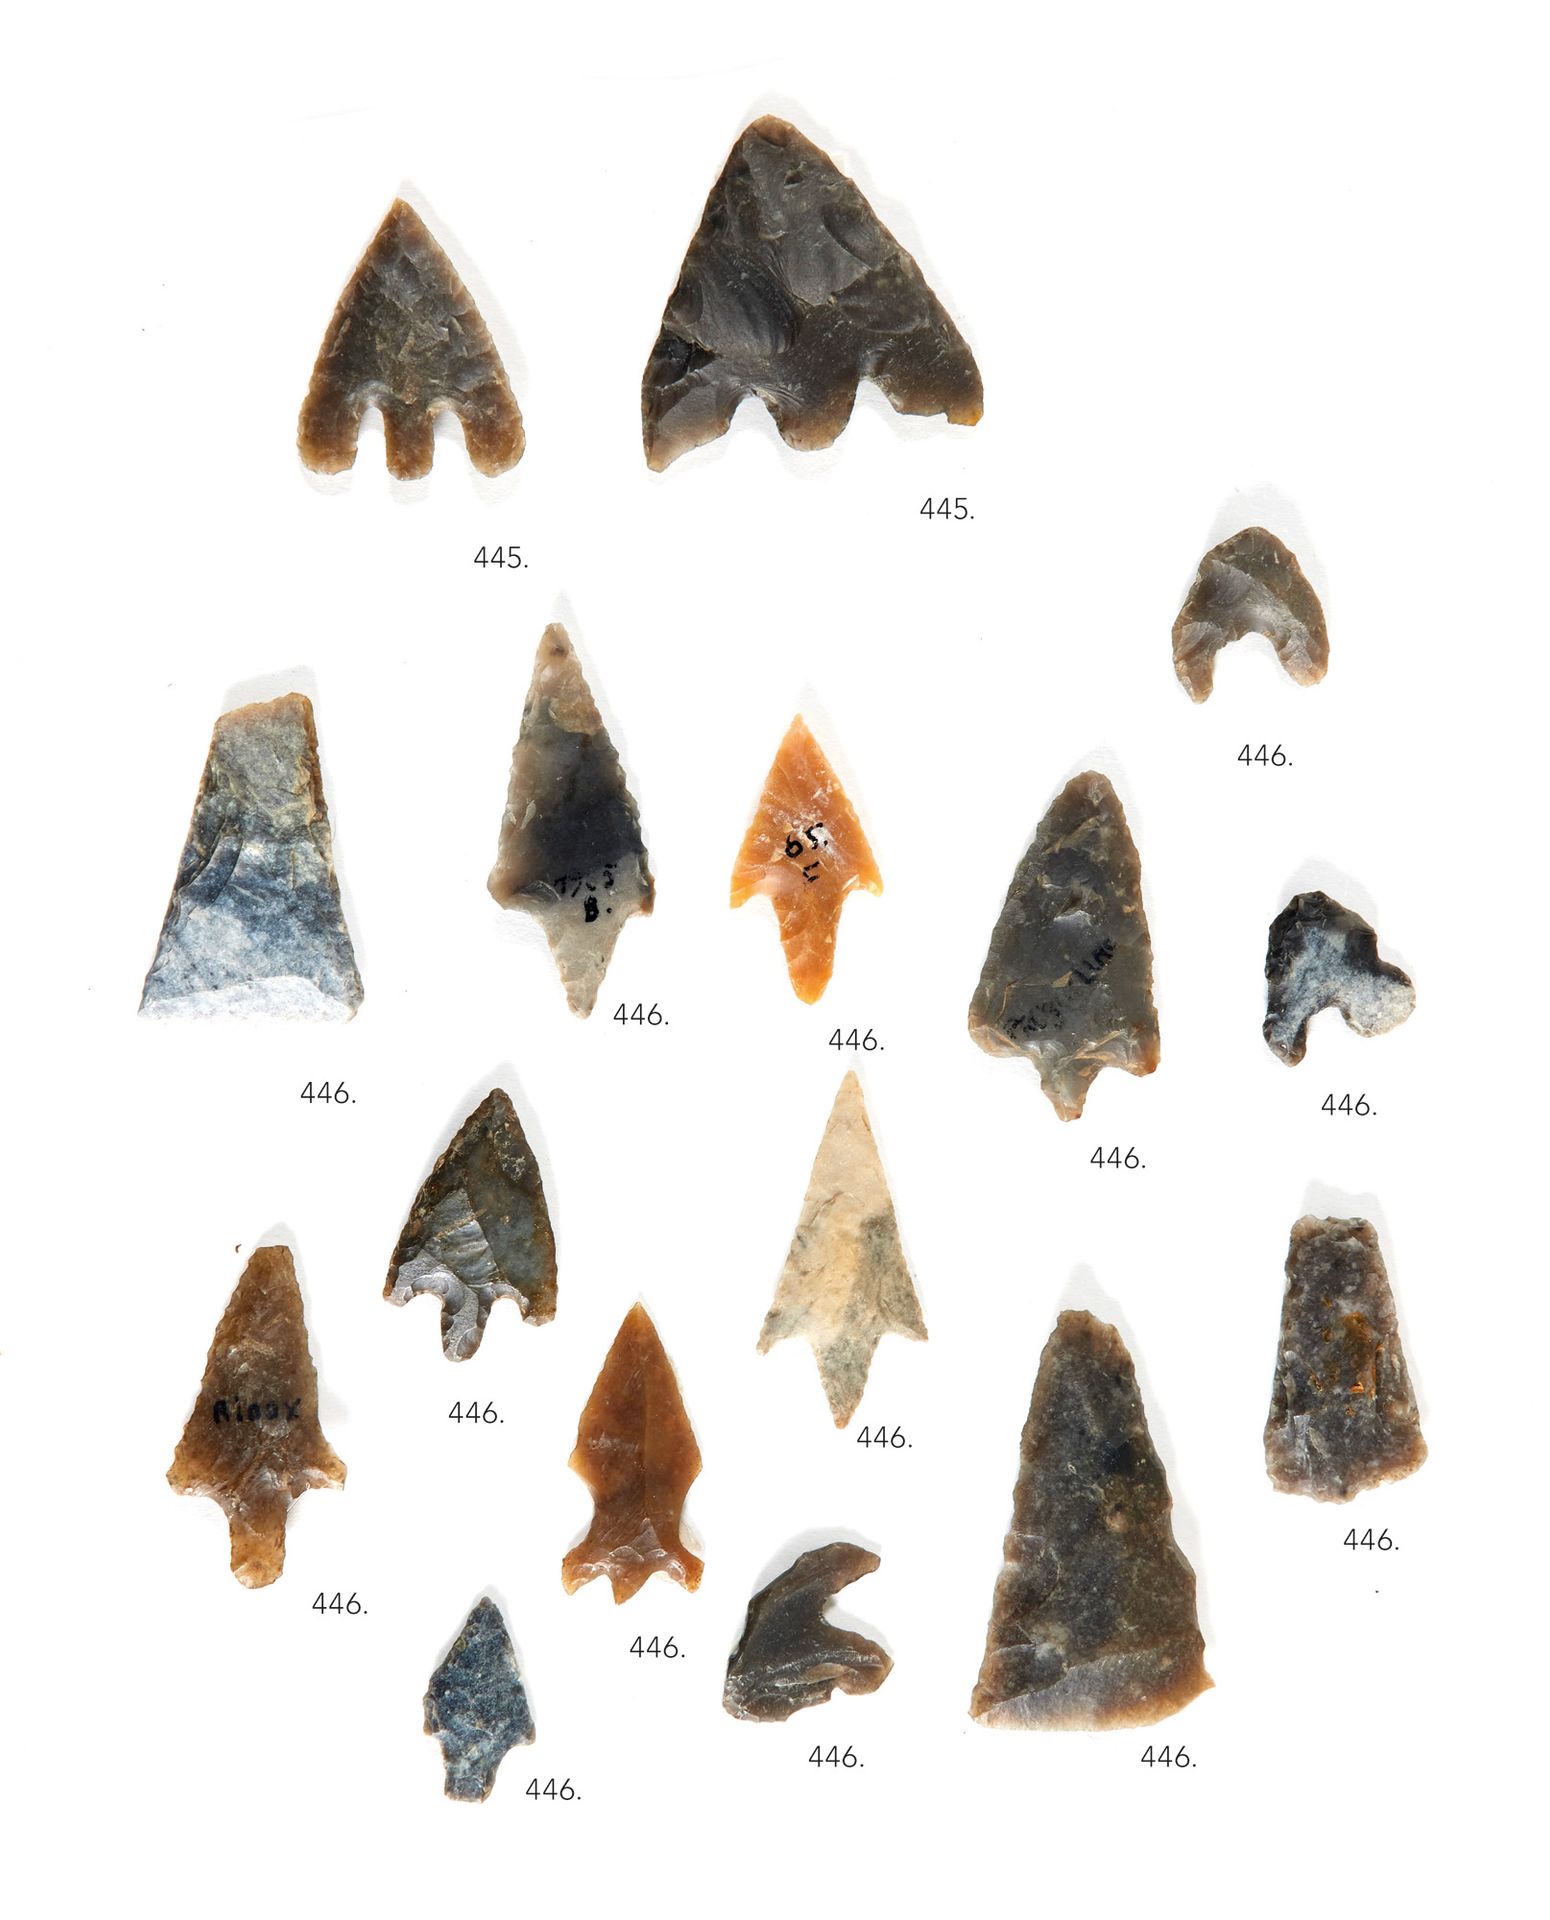 LOT 地段

十四支带翅膀和梗的箭头

灰色火石

法国, 新石器时代

从1.5到4厘米

铭文 "Puy Richard 8 mai 59"，"Riaux&hellip;